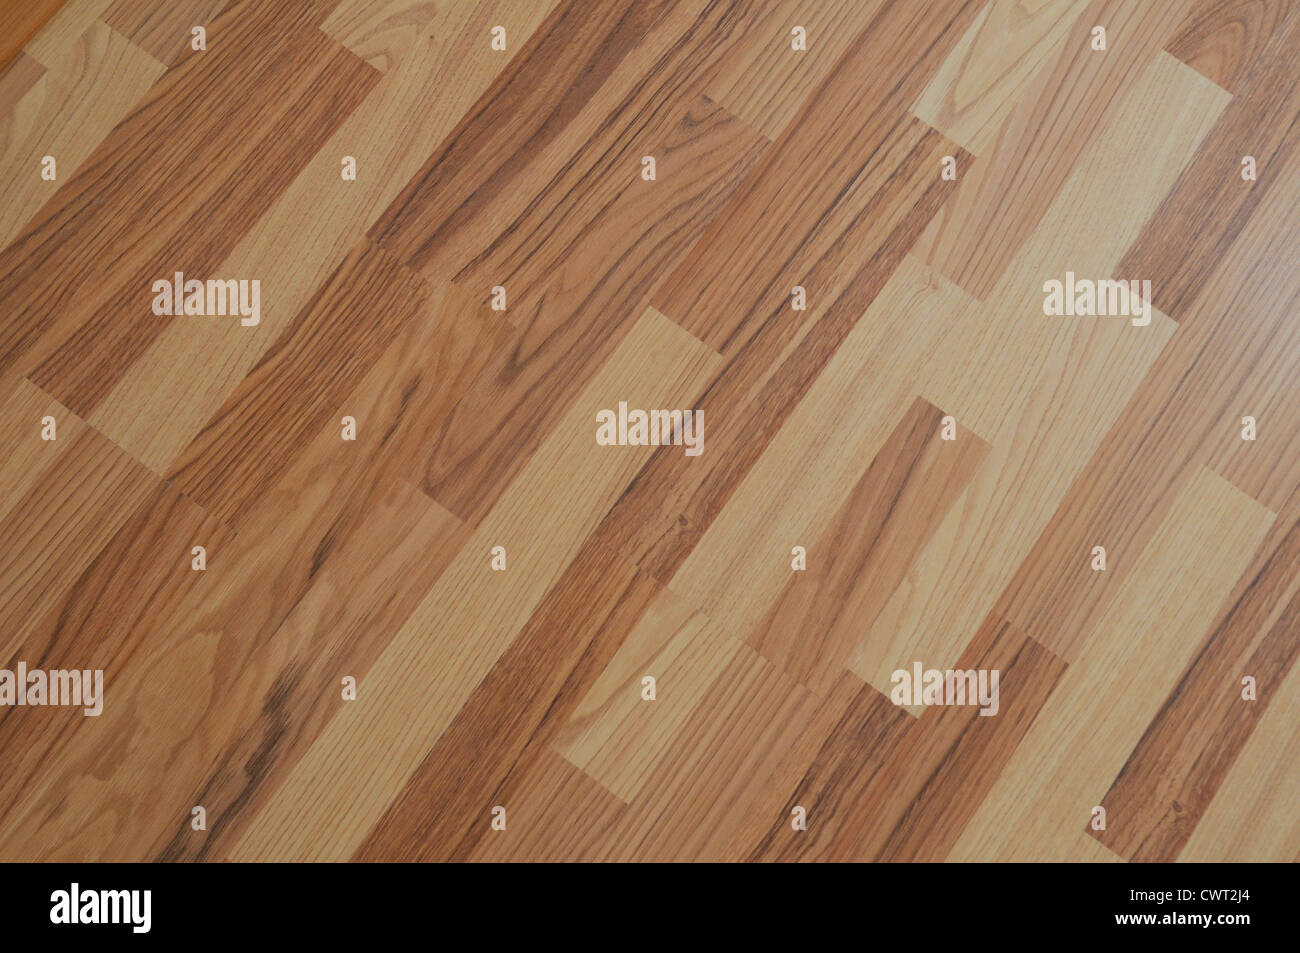 Laminated floor. Stock Photo